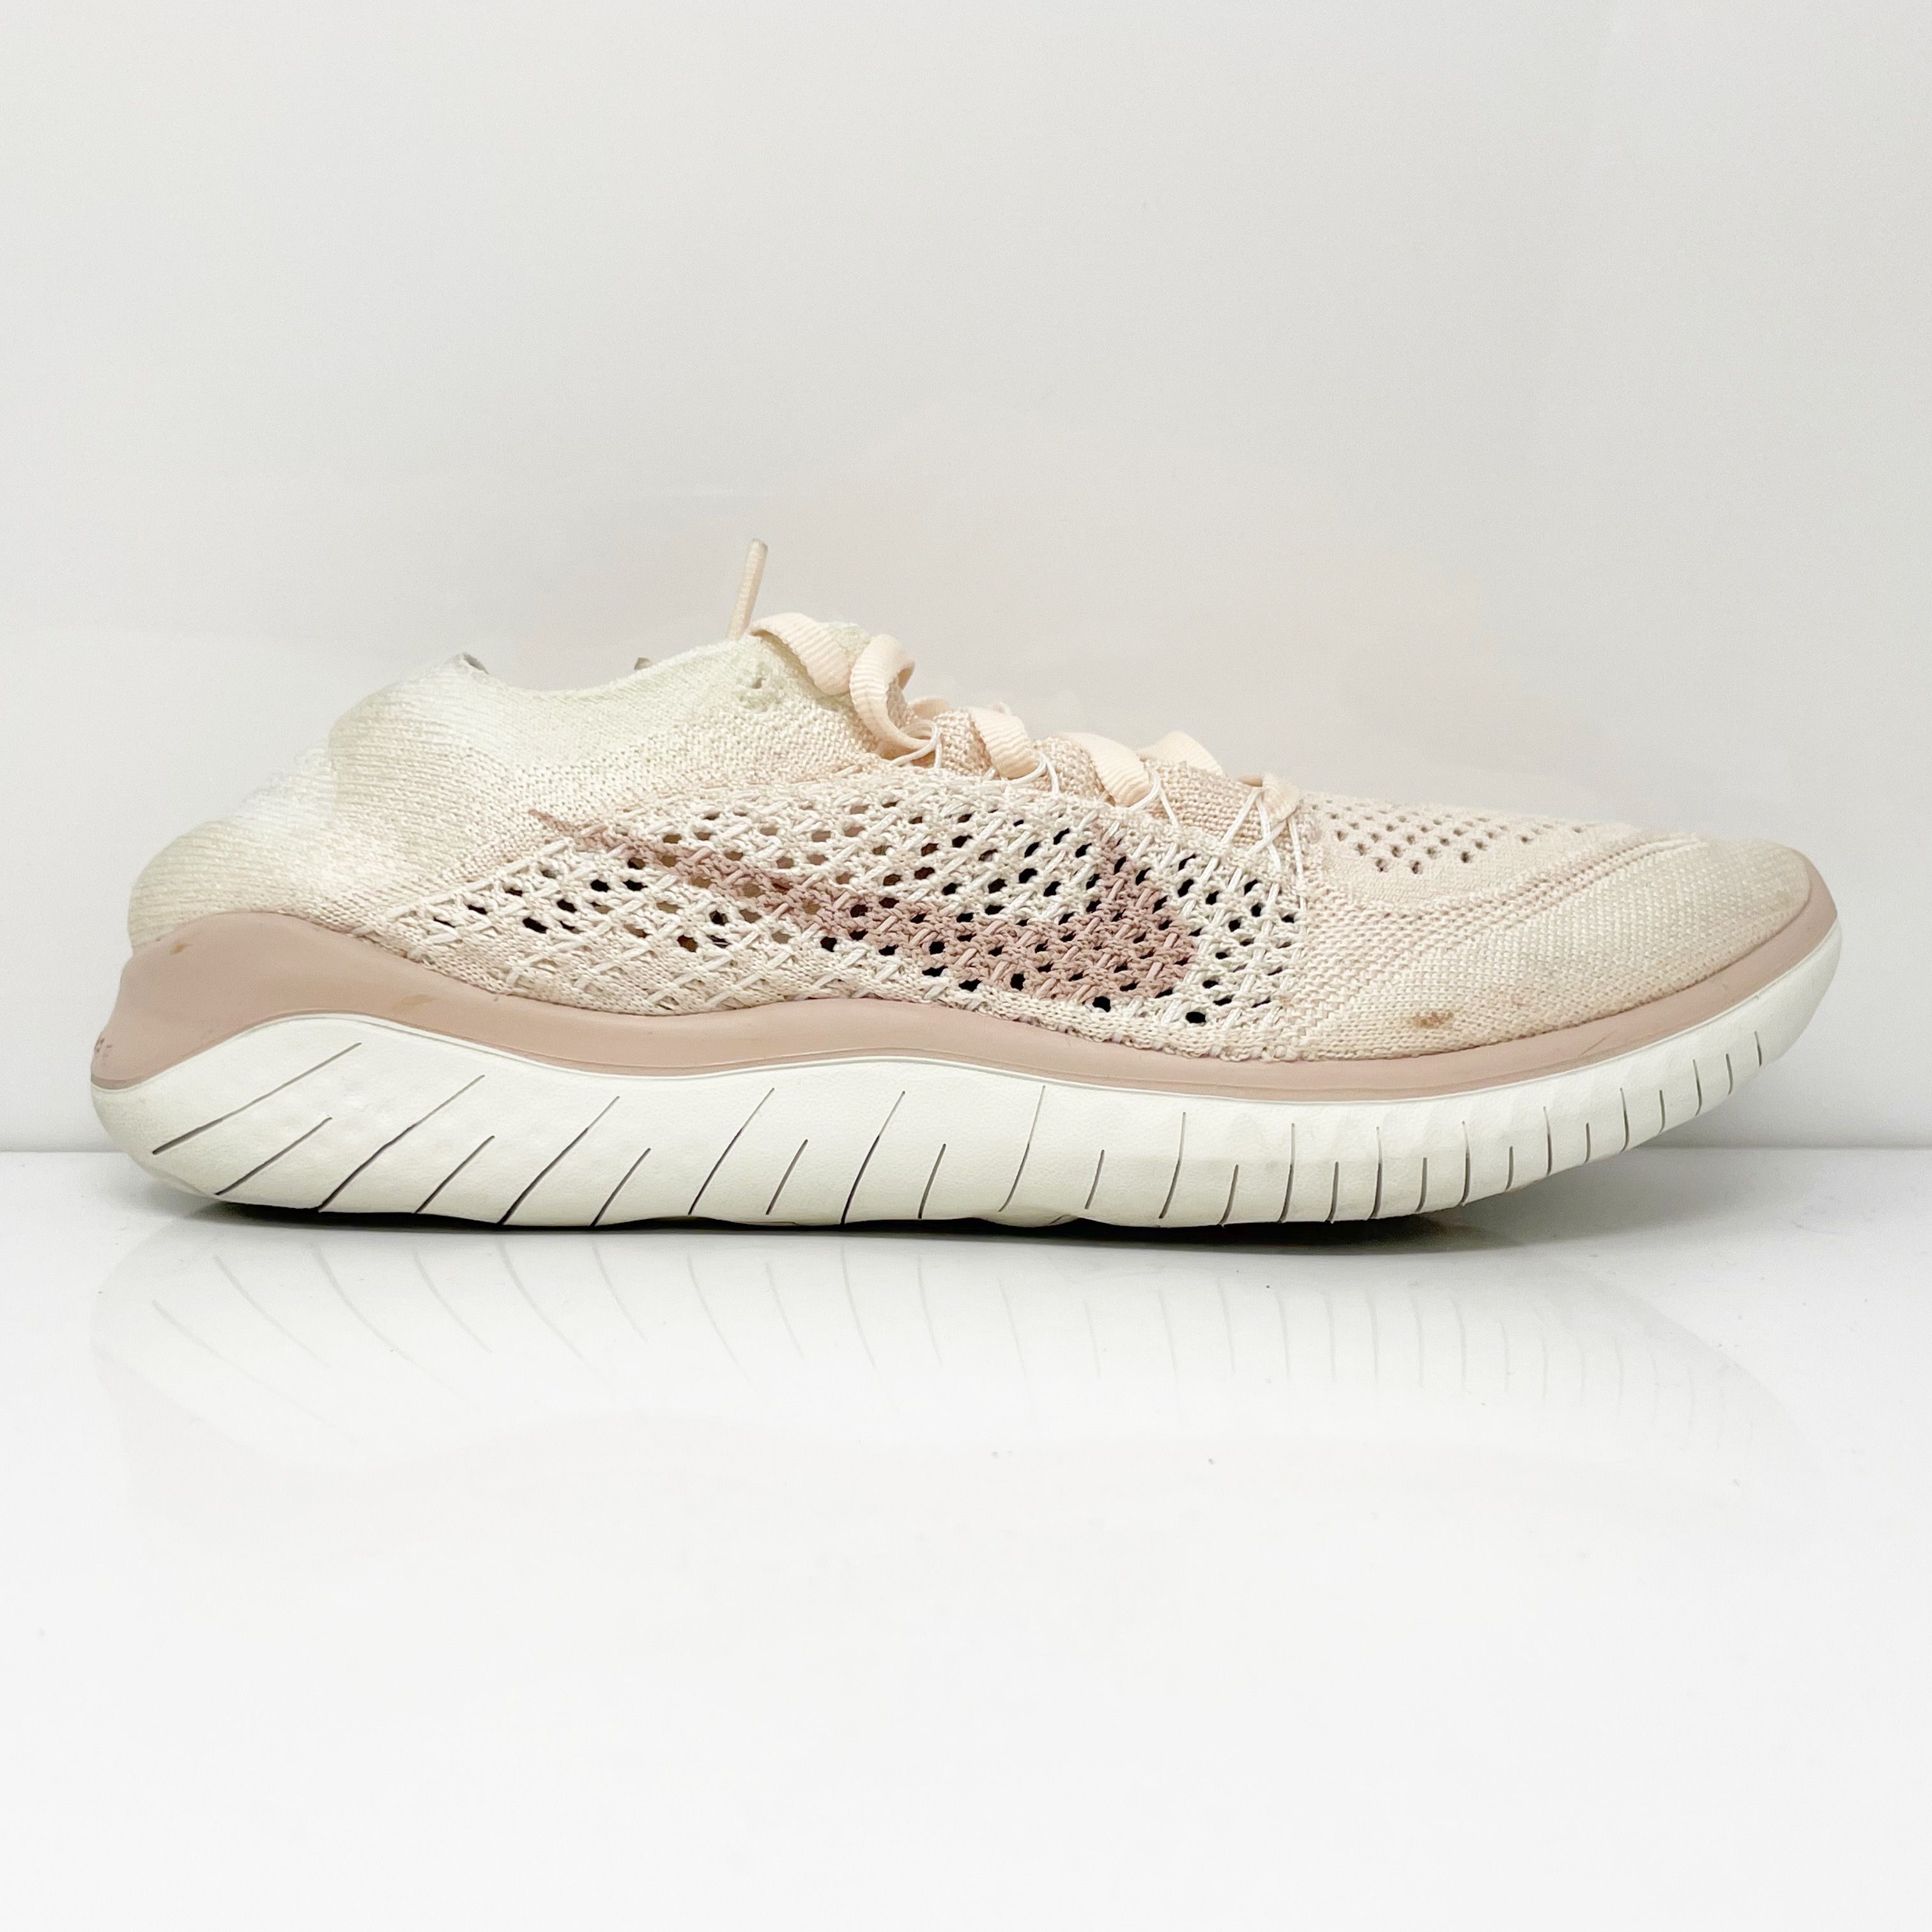 Nike Free RN Flyknit 942839-802 Pink Shoes Sneakers Size 9 | eBay